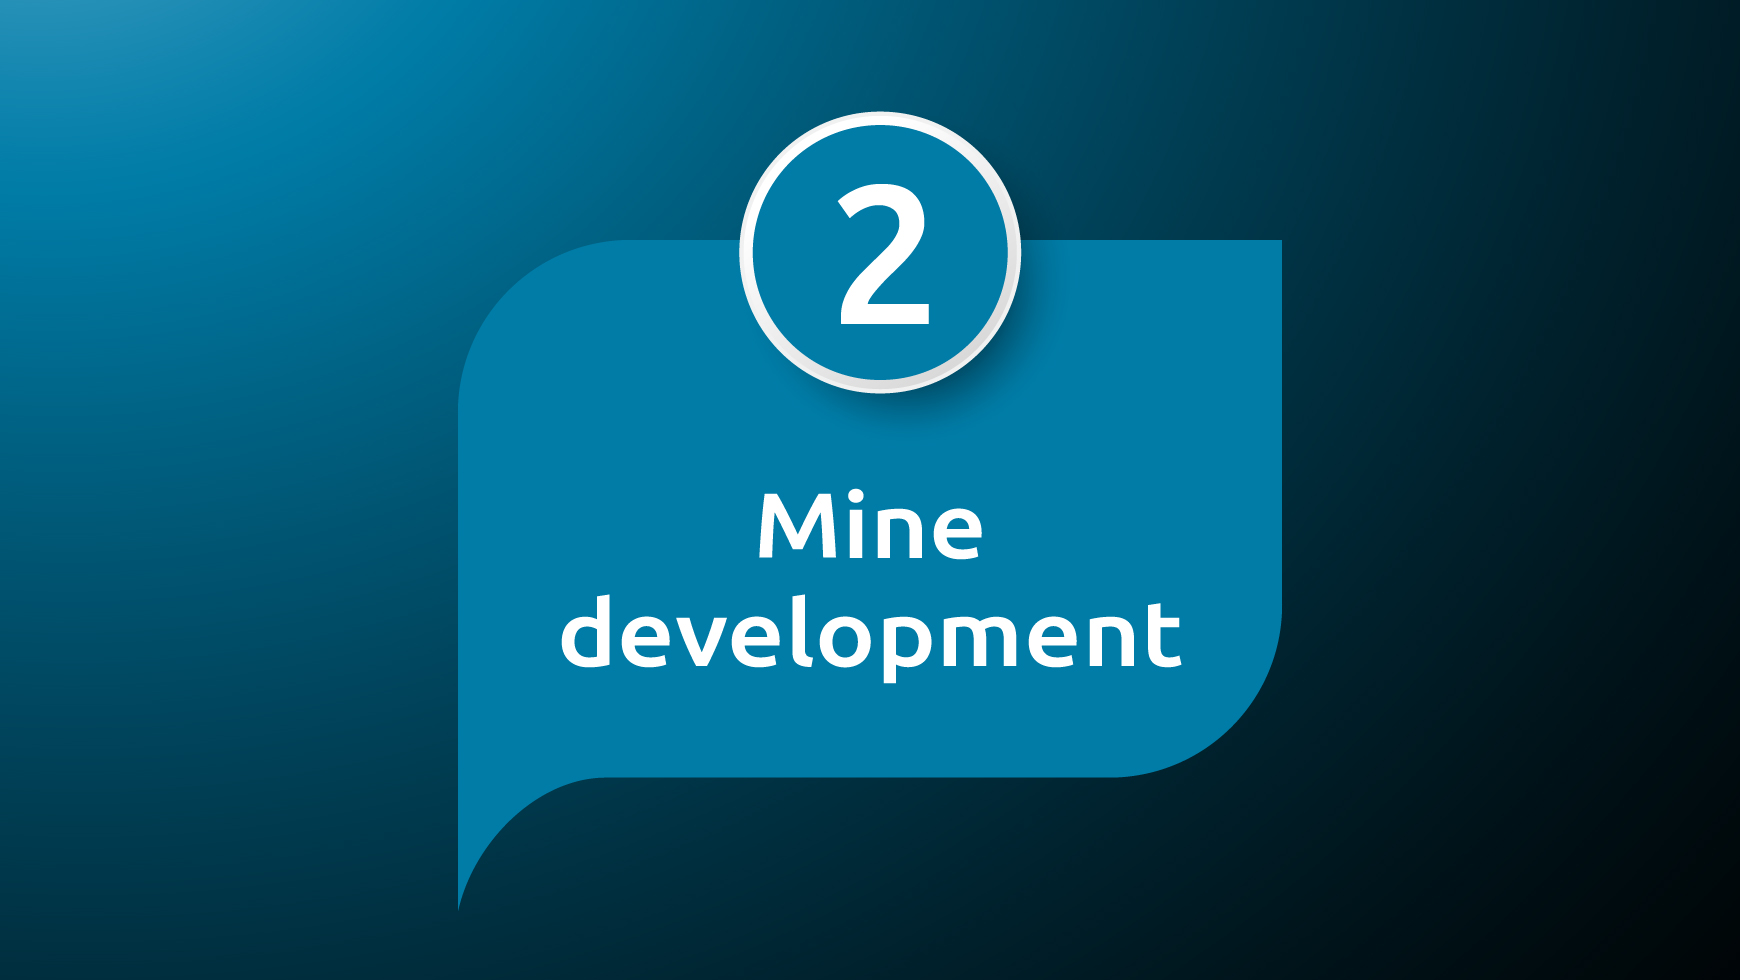 Mining life cycle stage 2 Mine development